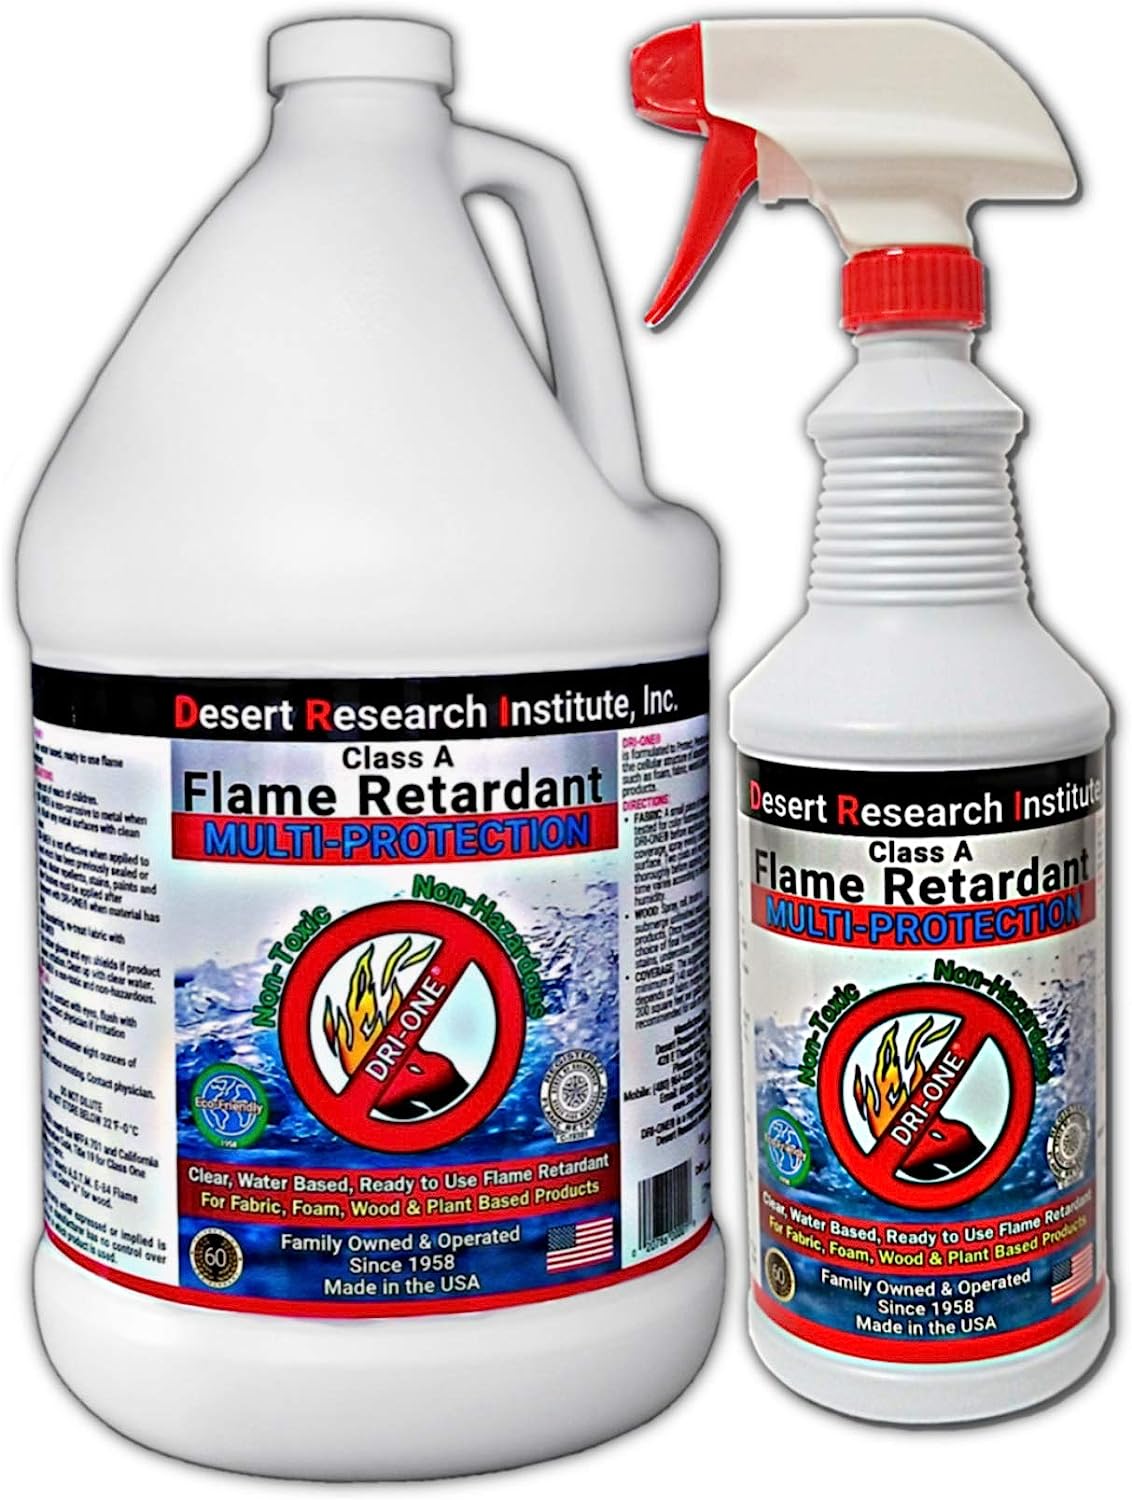 DRI-ONE Fire Retardant Spray for Fabric, Wood & More - [...]